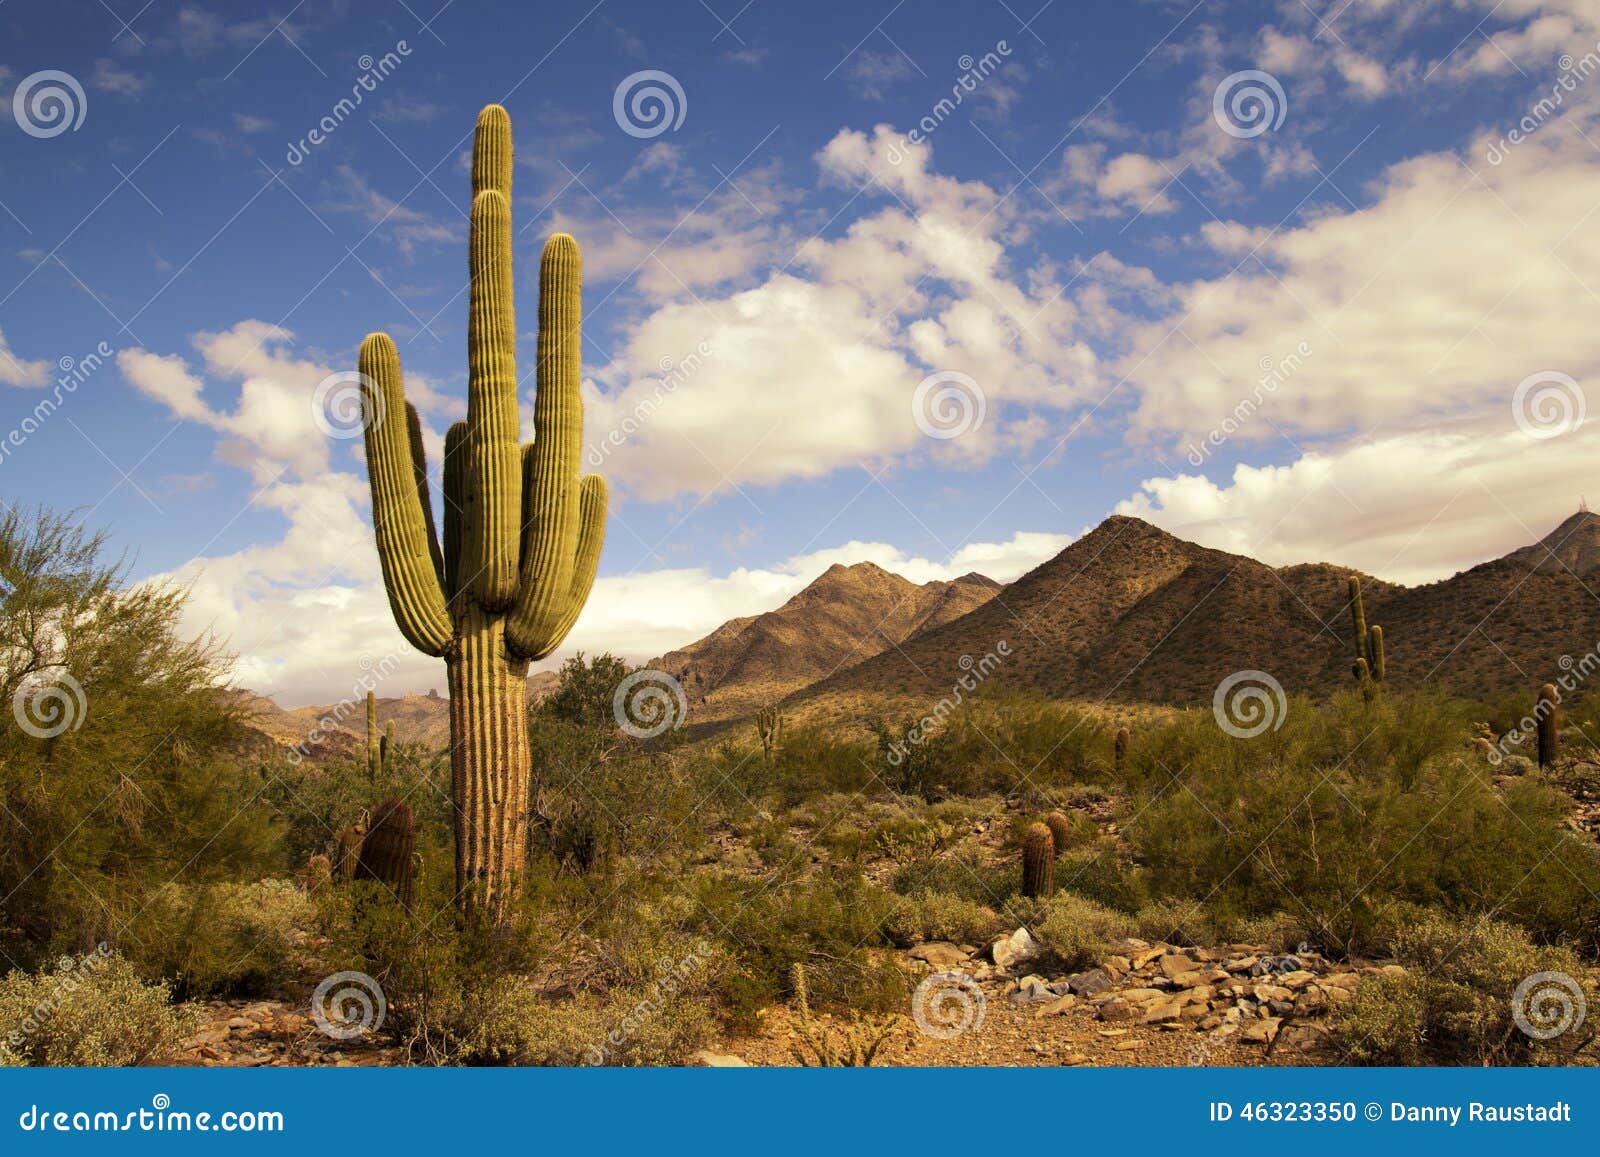 desert cactus and mountains landscape